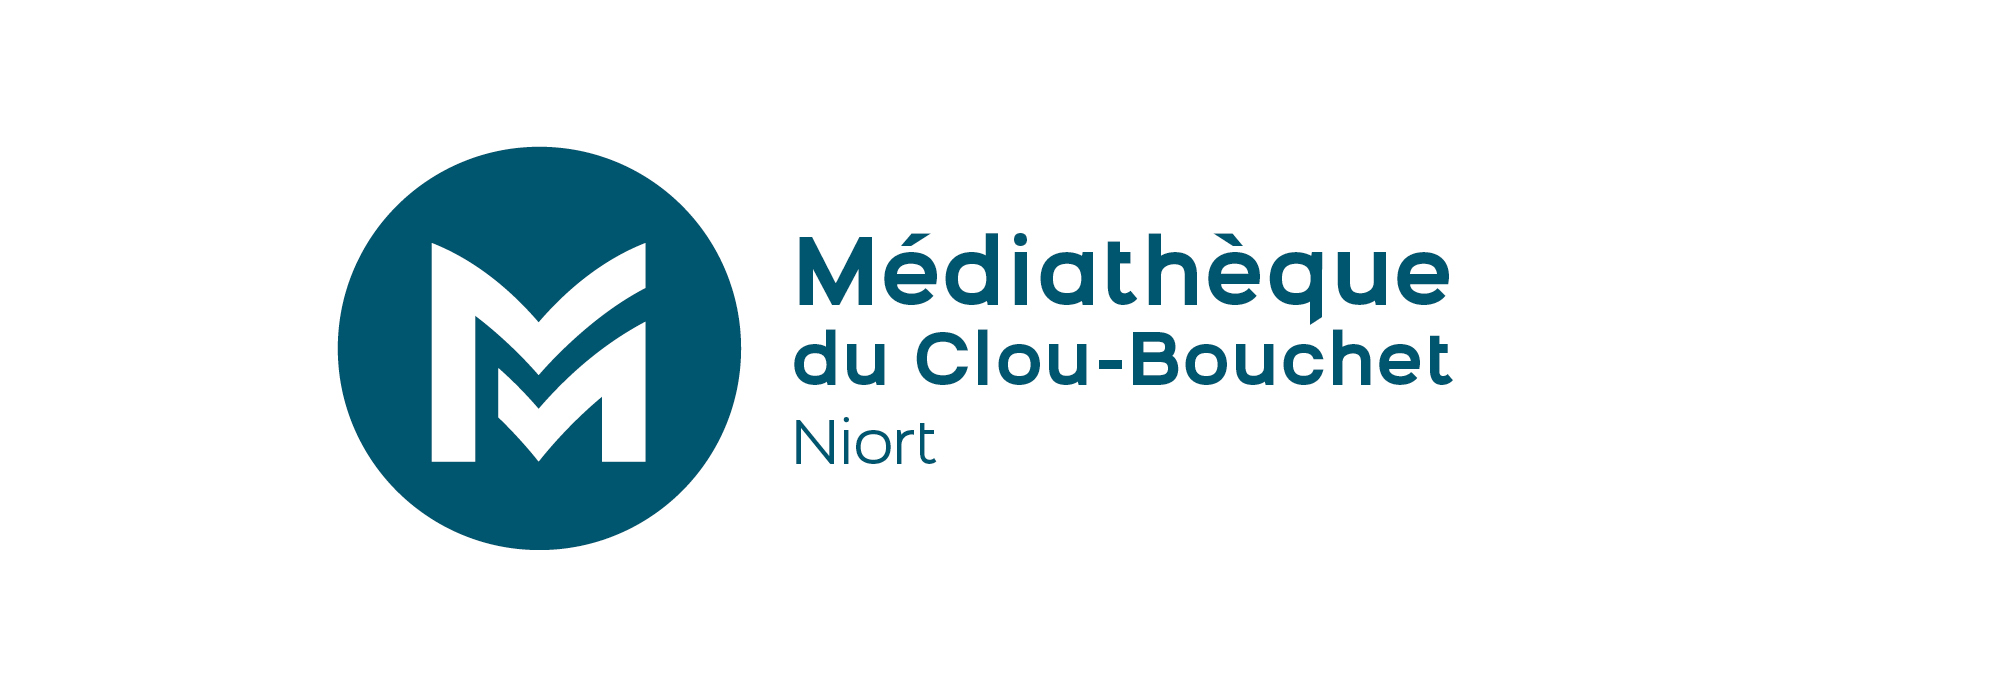 Médiathèque Clou-Bouchet Niort